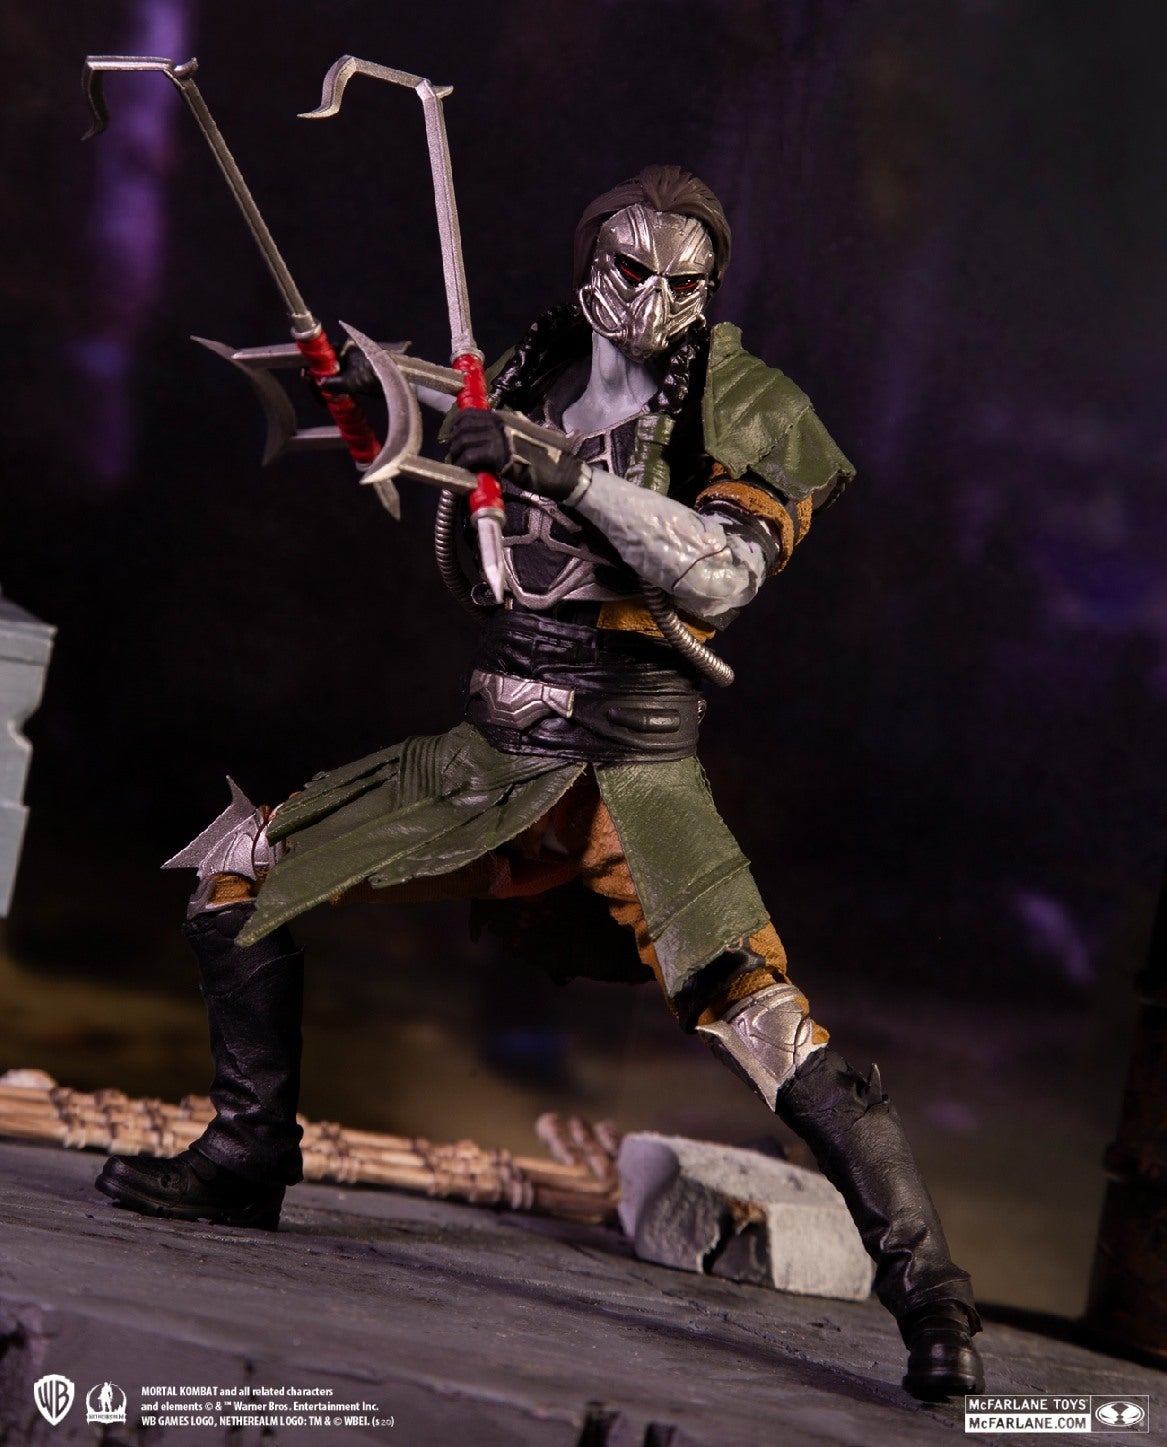 Mortal Kombat - Shao Kahn and Liu Kang Variants by McFarlane Toys - The  Toyark - News